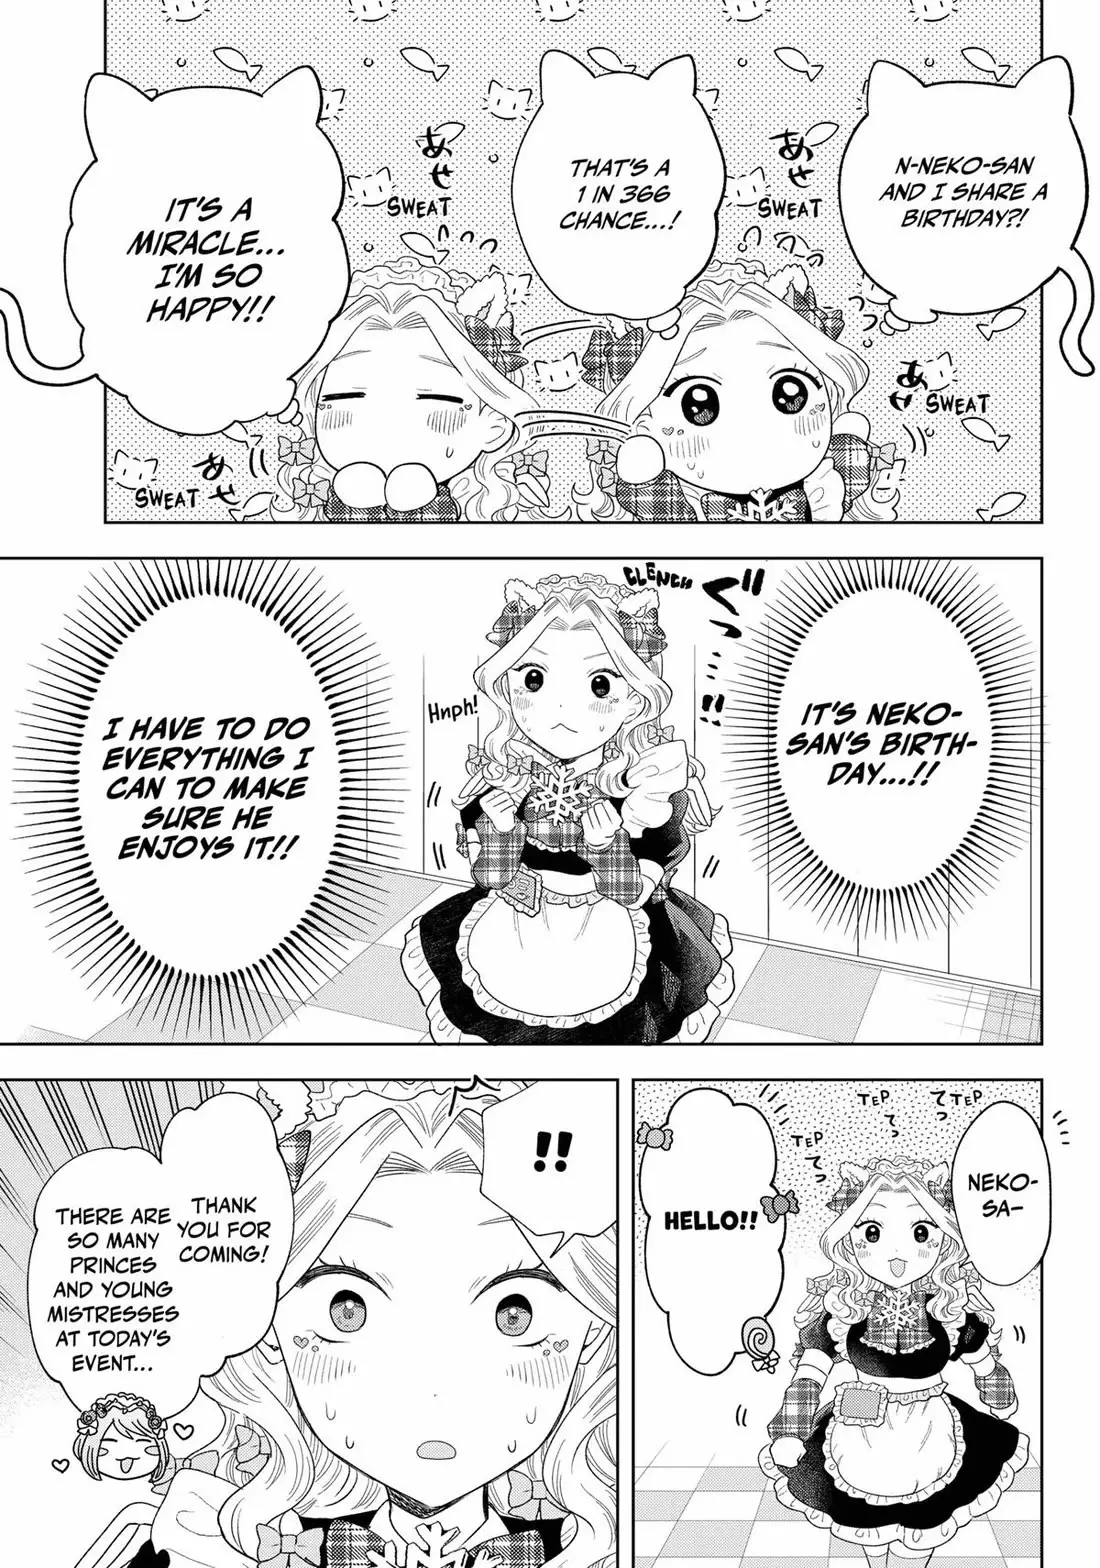 Tsuruko Returns The Favor - 22 page 5-9e13a06c